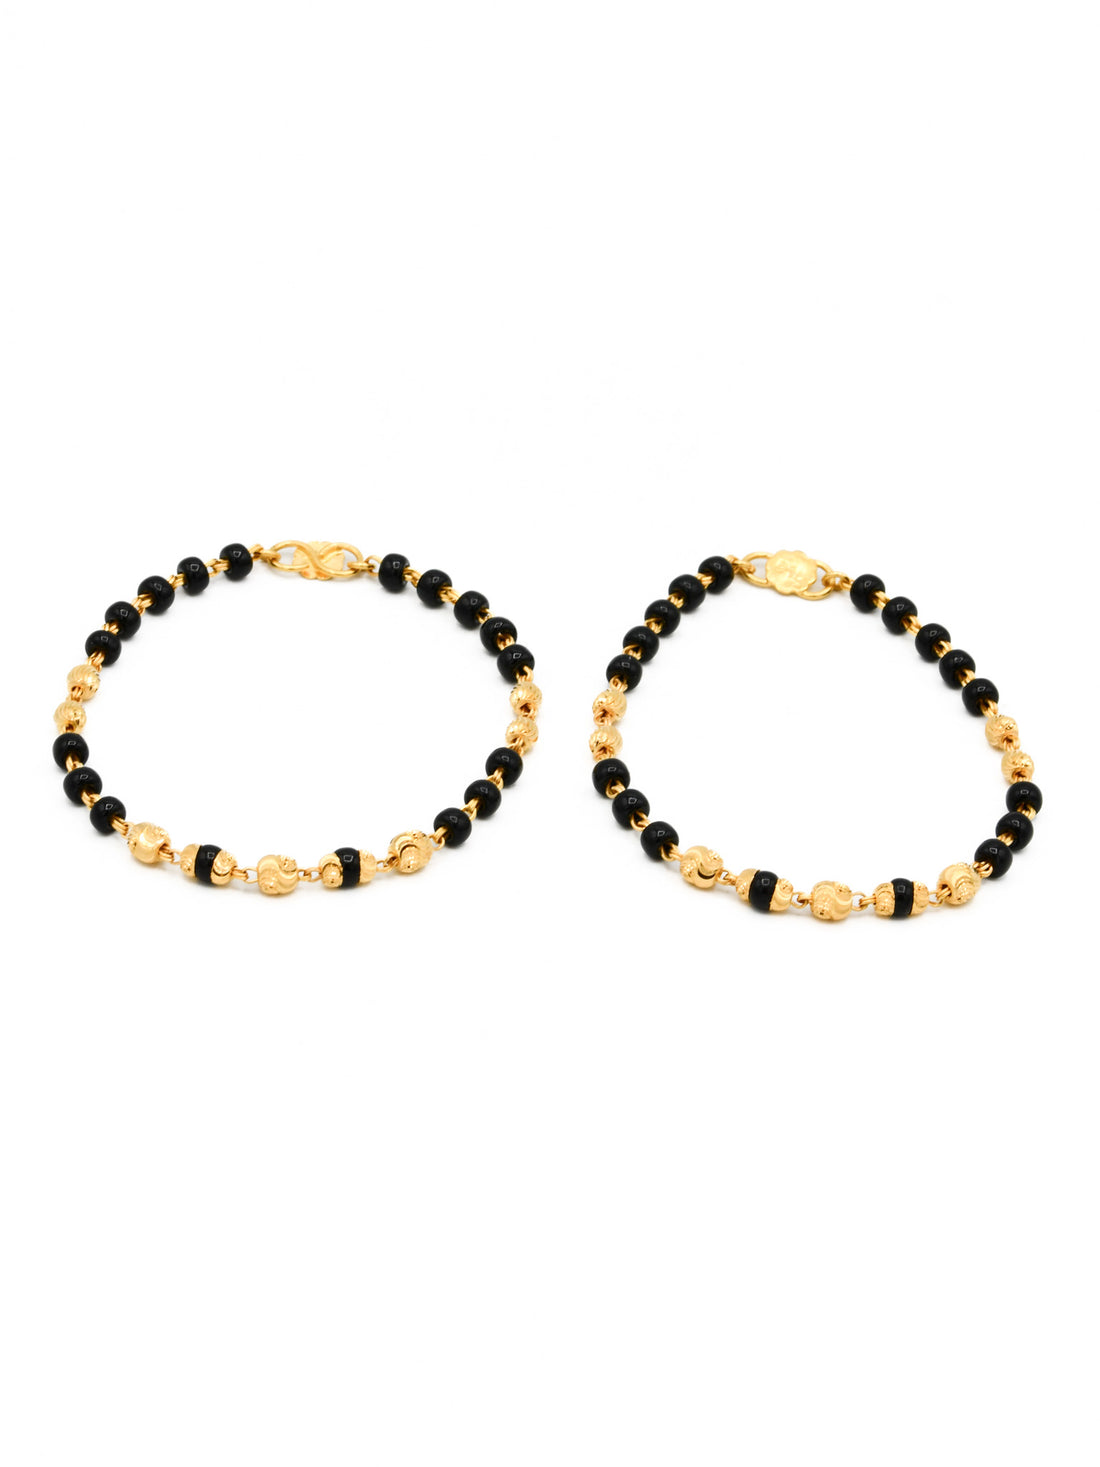 22ct Gold Ball Black beads Pair Baby Bracelet - Roop Darshan